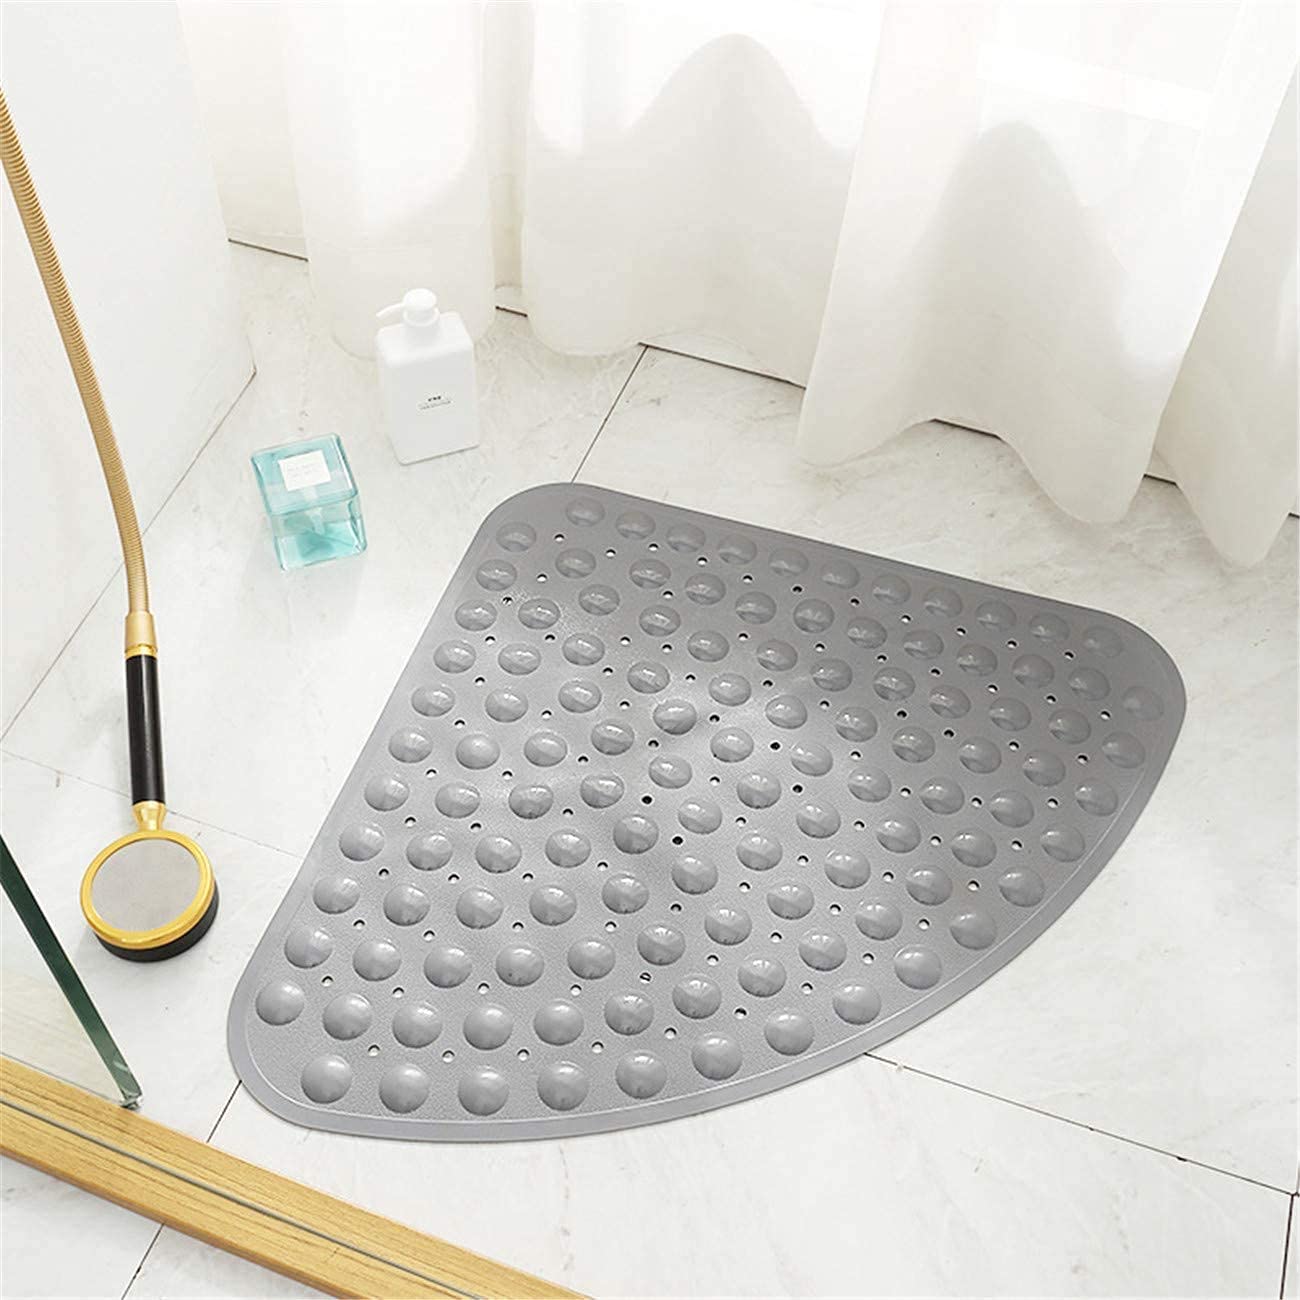 Anti Slip Triangle Stand up Shower Bath Mat Soft Pebble (70*70 cm) - Grey LifeKrafts